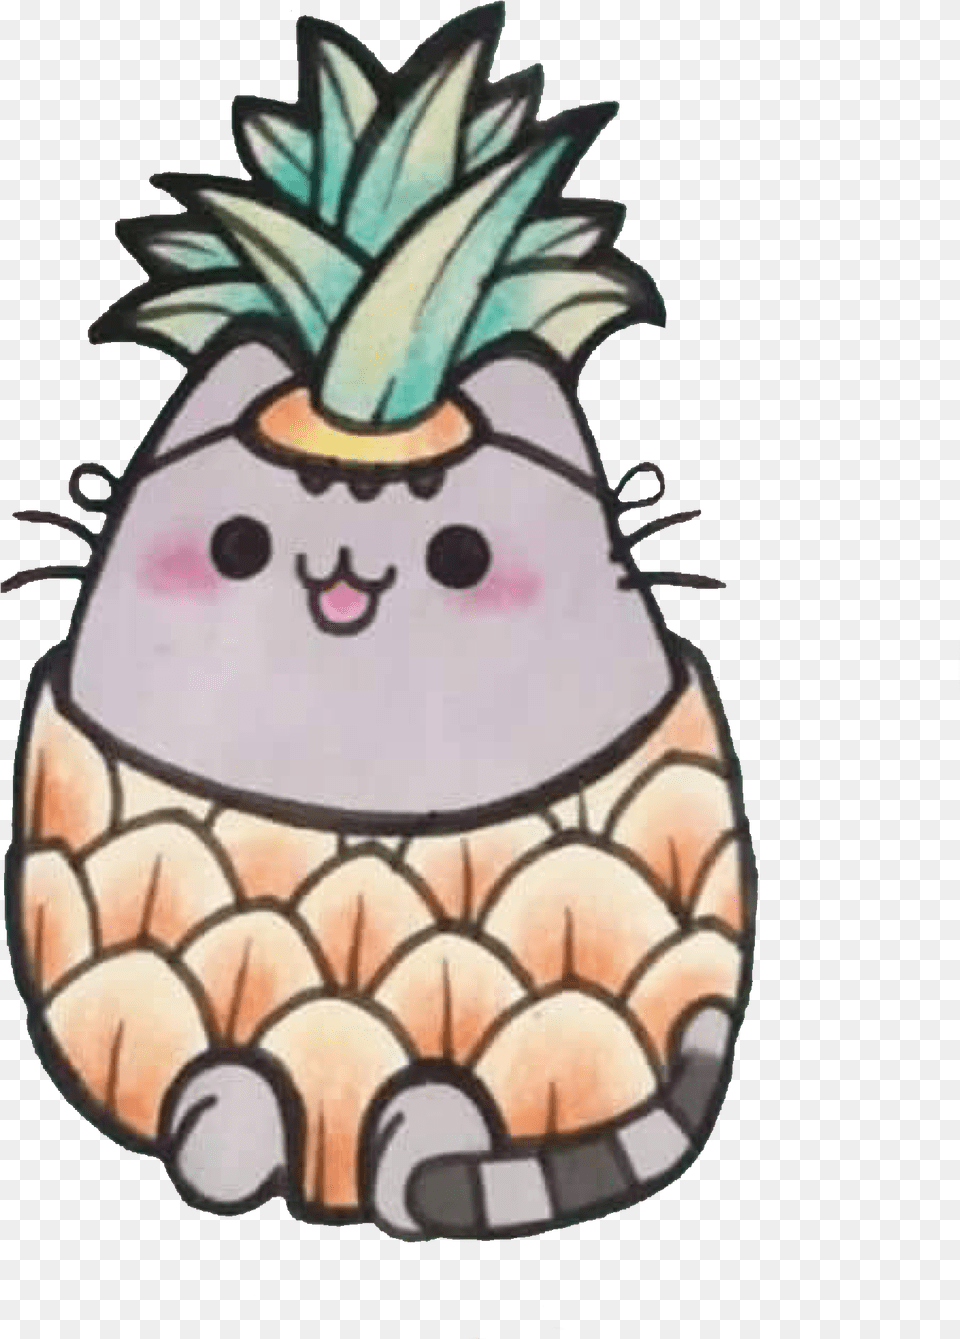 Download Pineapple Pusheen Cute Cat Kitty Kitten Costume Aww Kawaii Pusheen, Food, Fruit, Plant, Produce Free Transparent Png